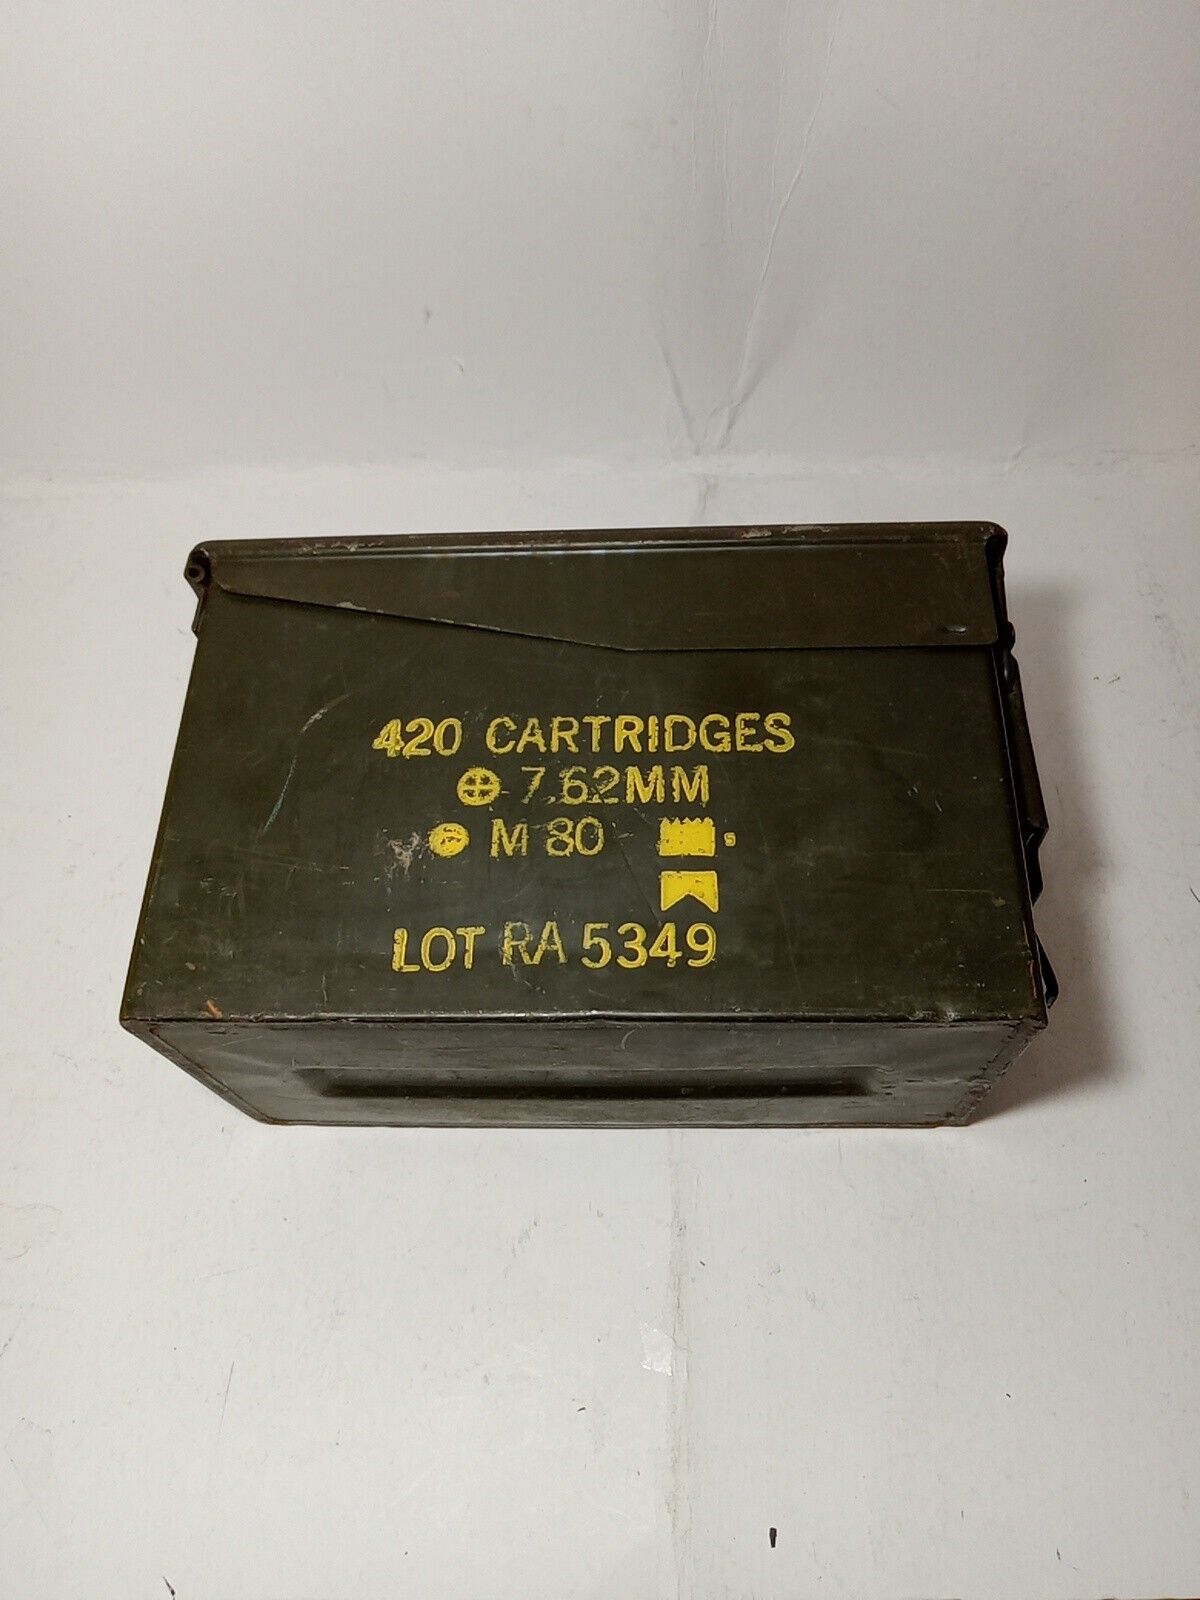 Vintage U.S. Military 420 Cartridges 7.62 MM M80 Ammo Box.